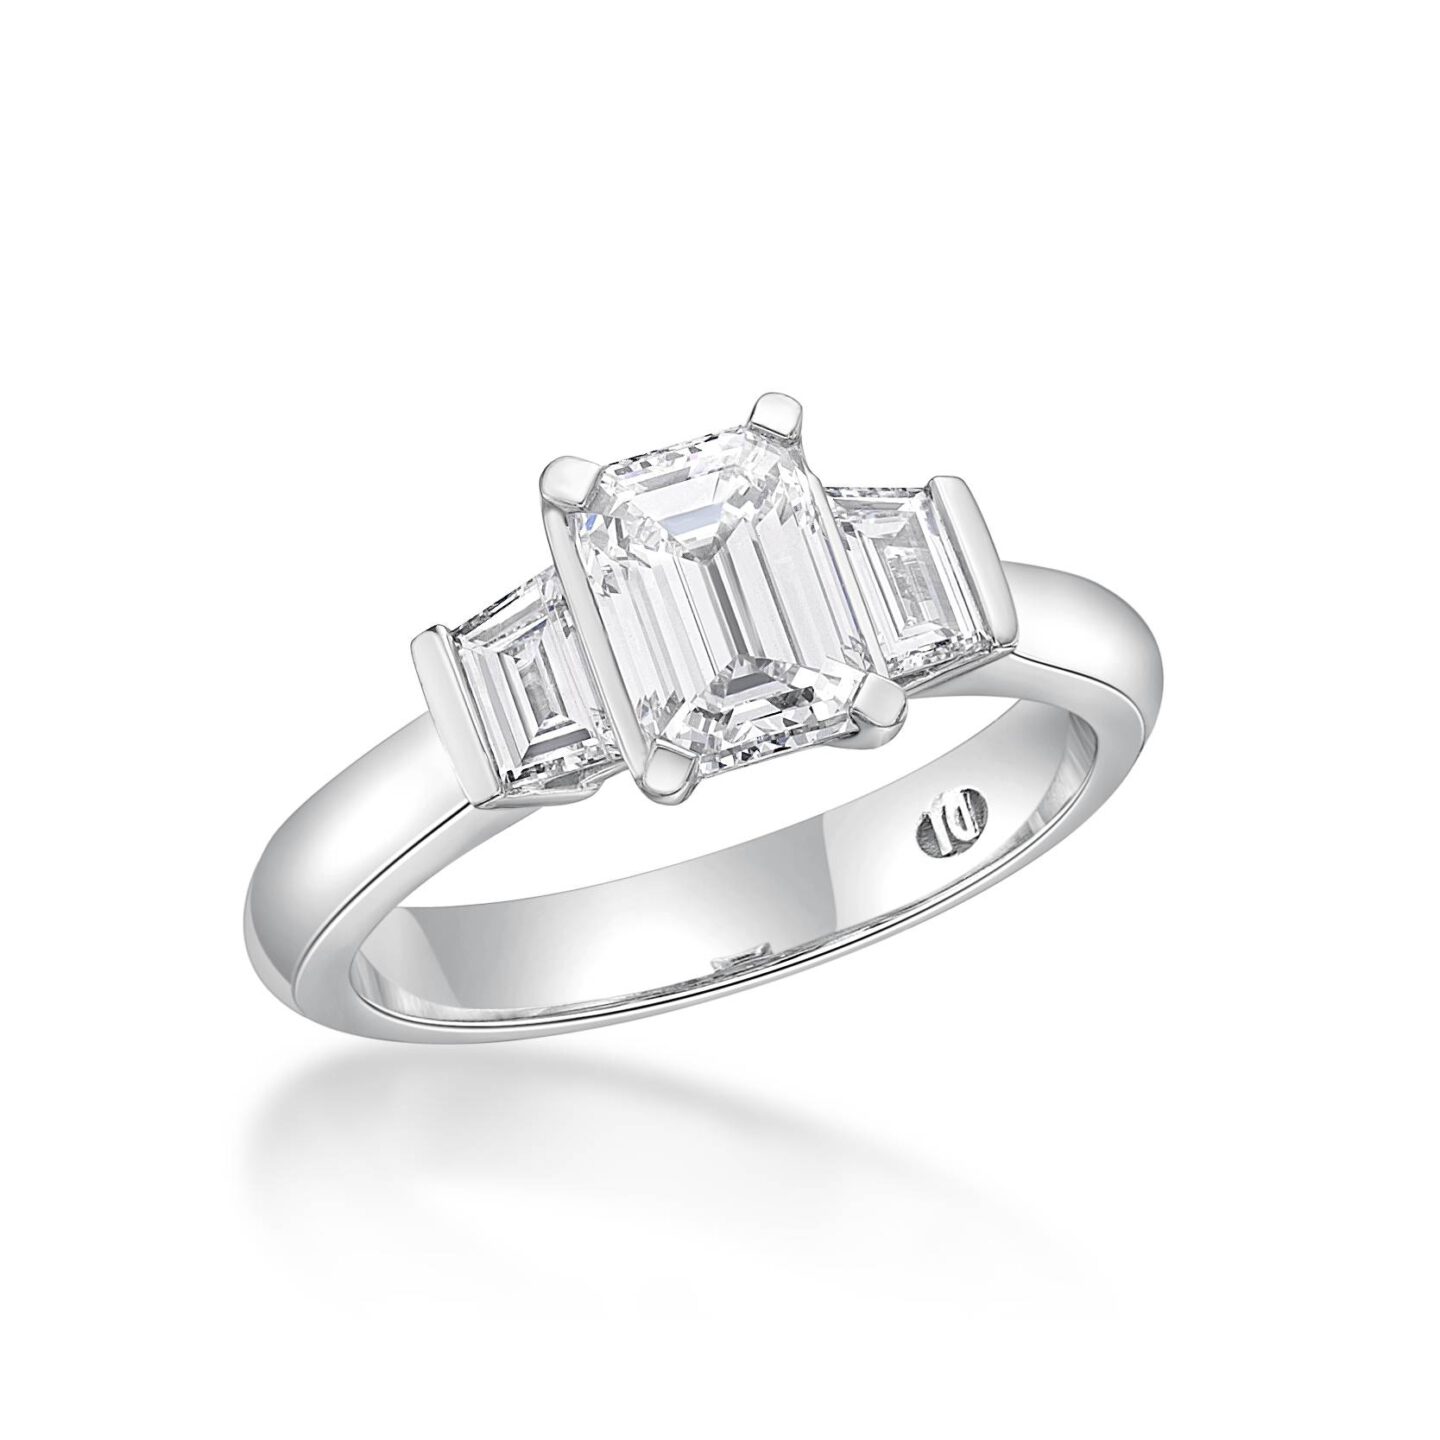 Portia – Emerald Cut Diamond Trilogy Engagement Ring